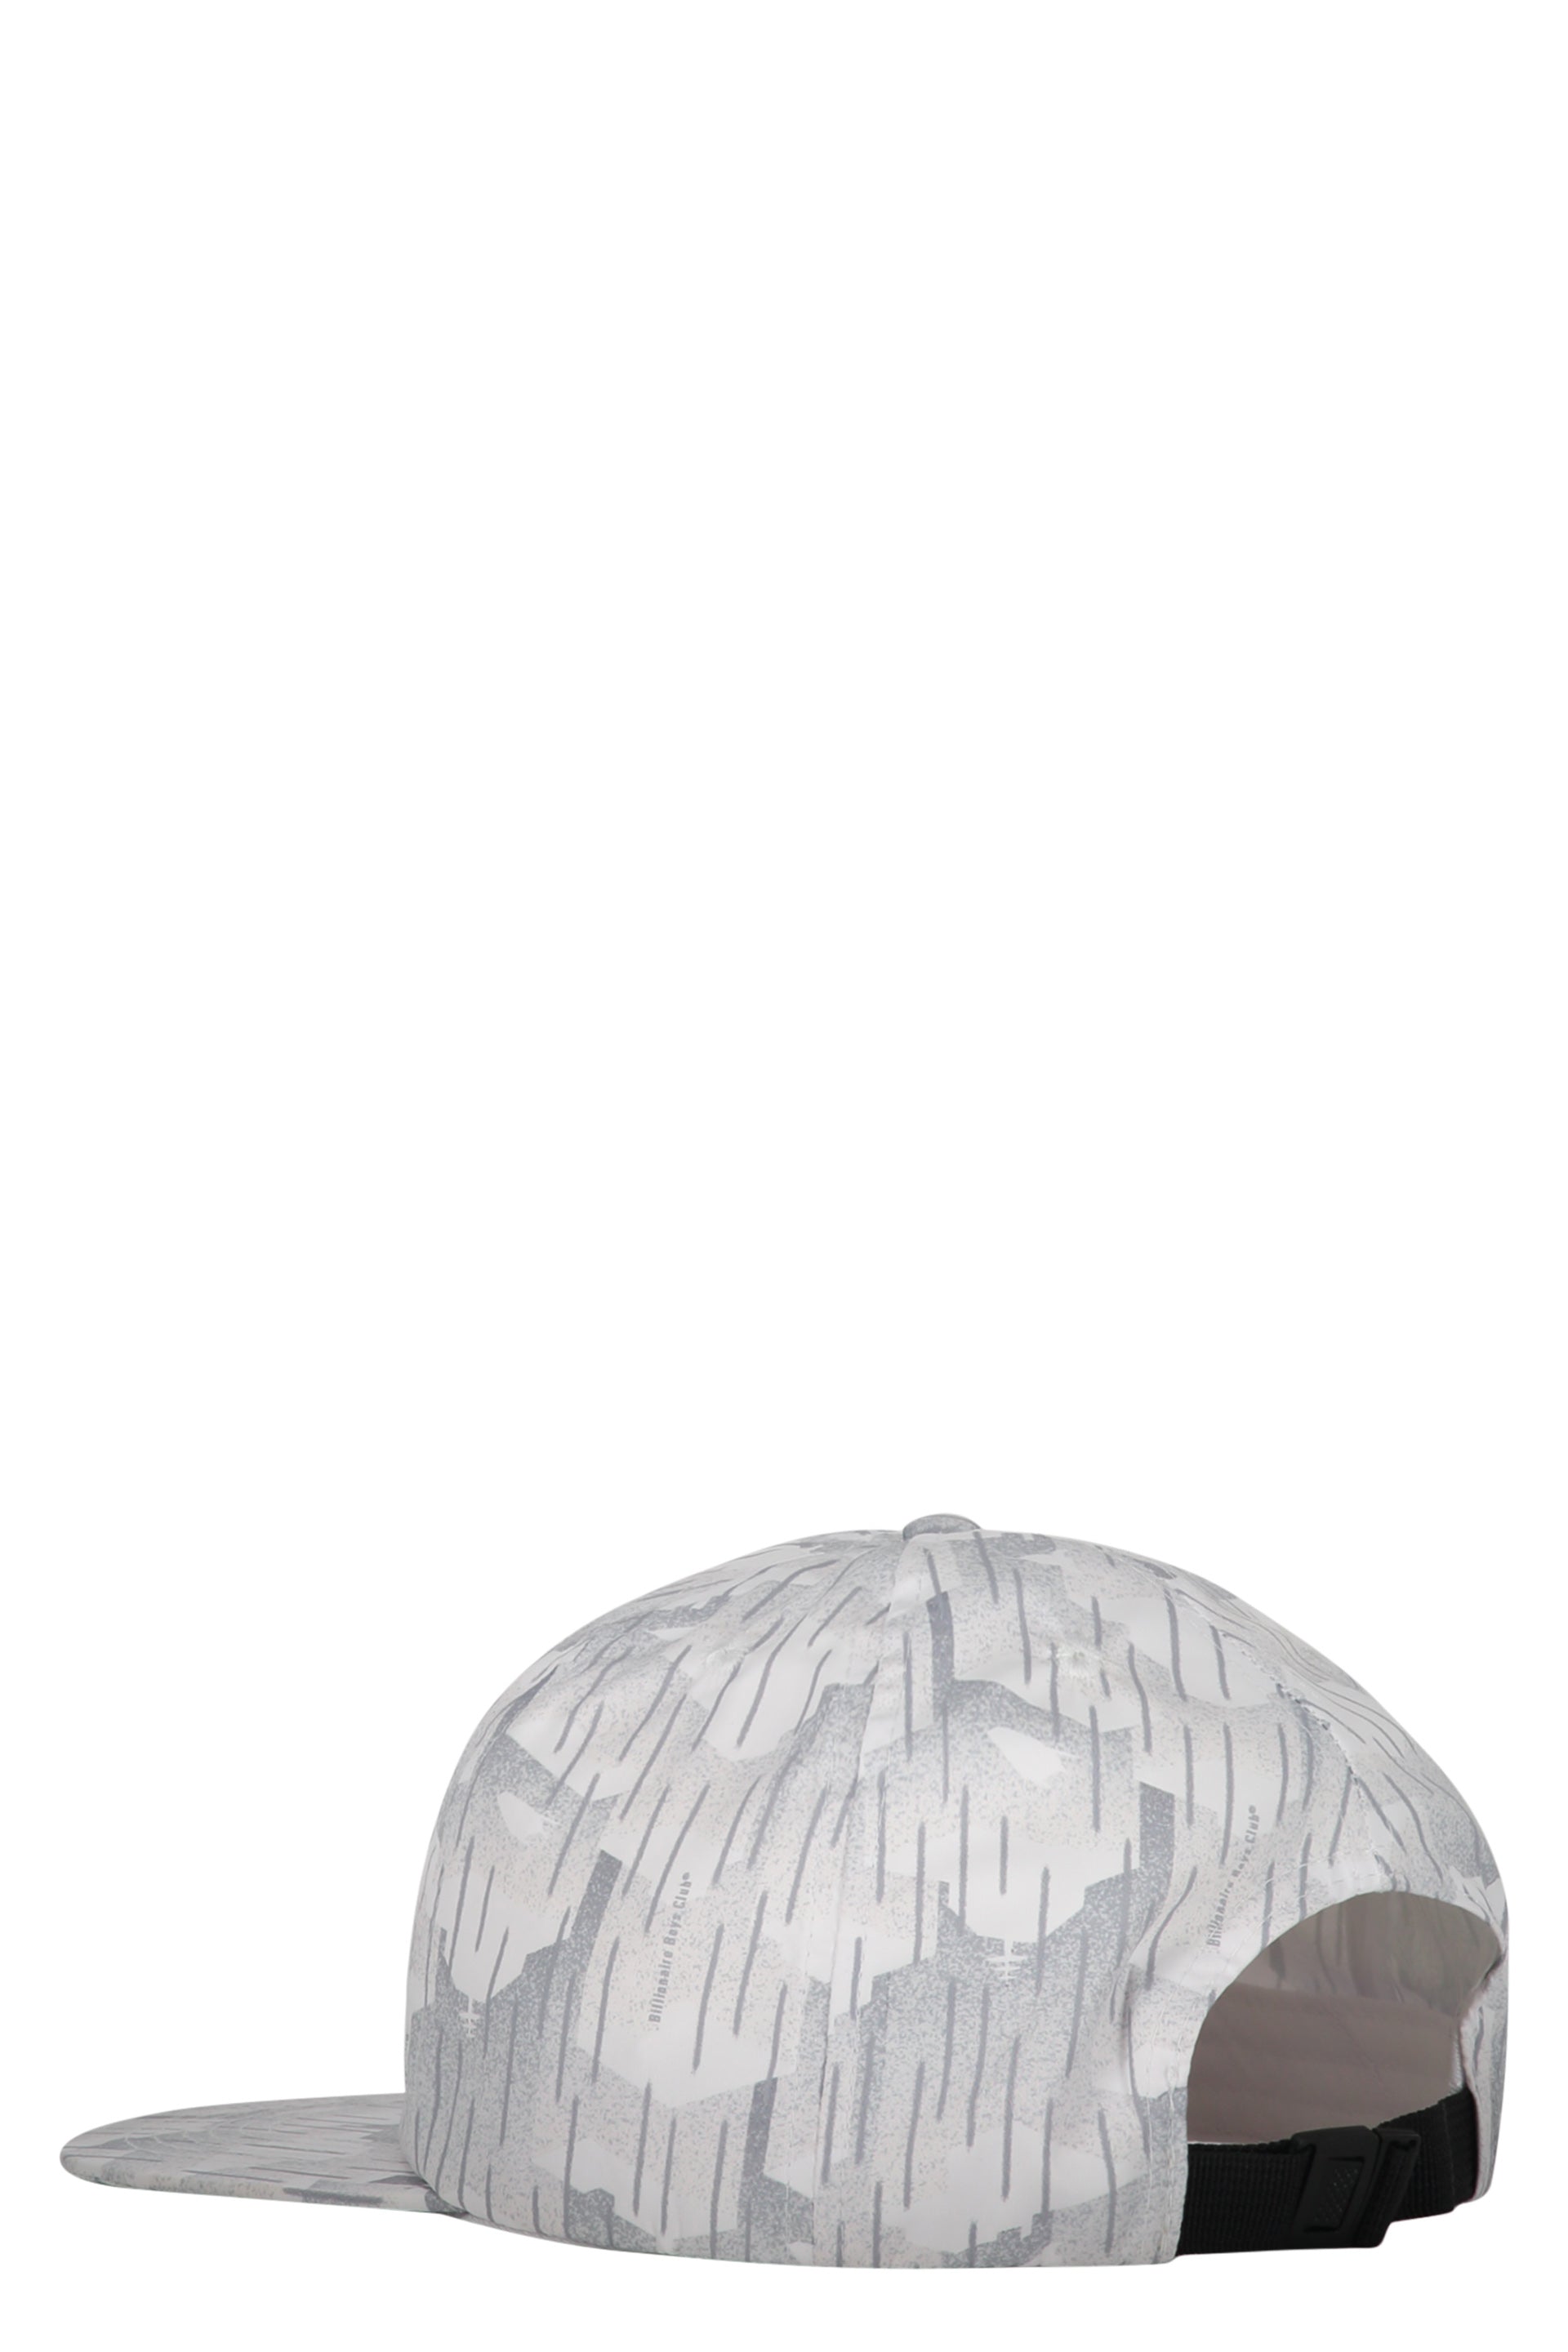 Baseball hat with flat visor